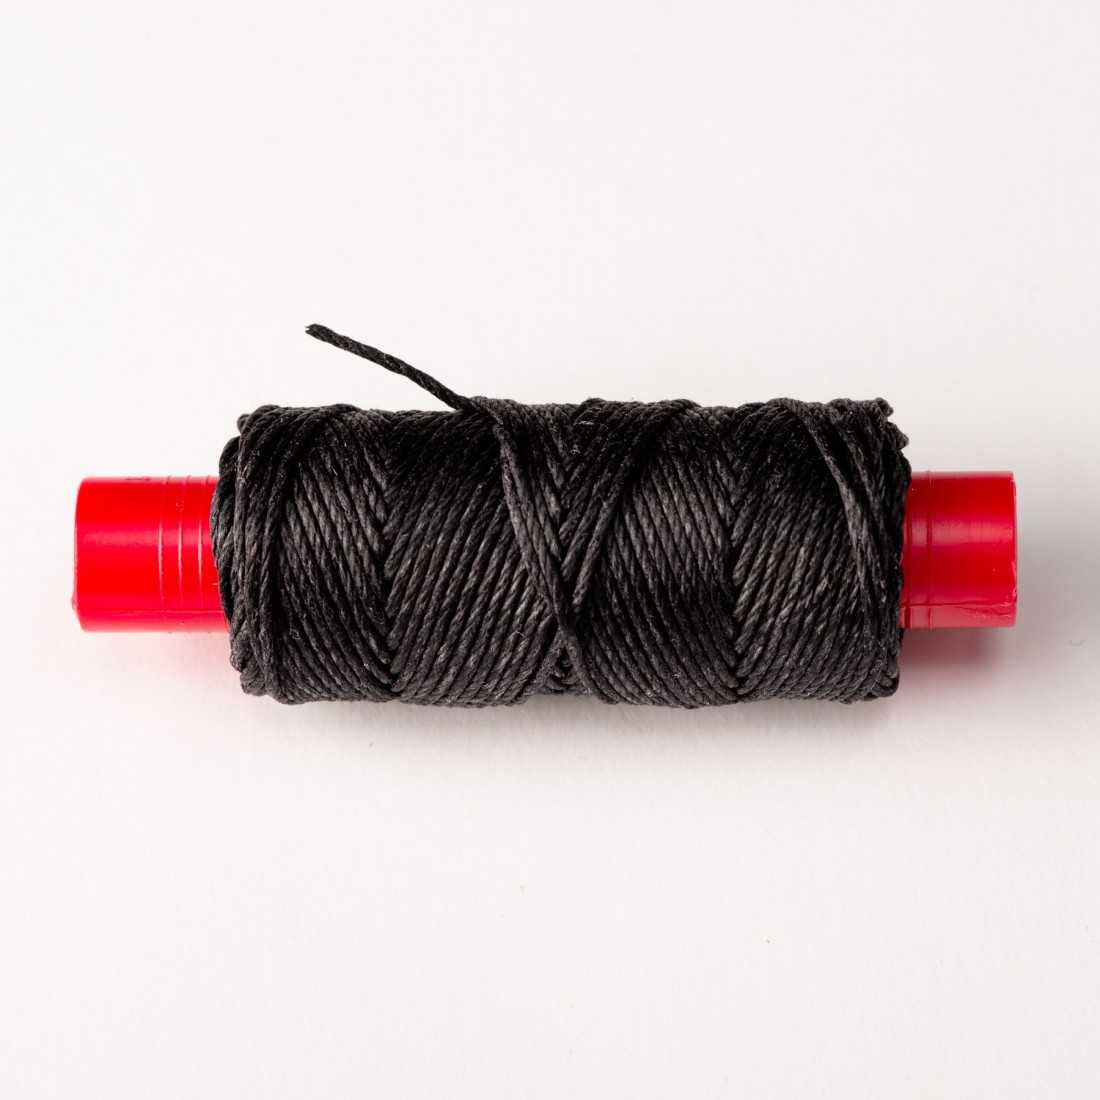 Black rope mm.1,30  20 mt.